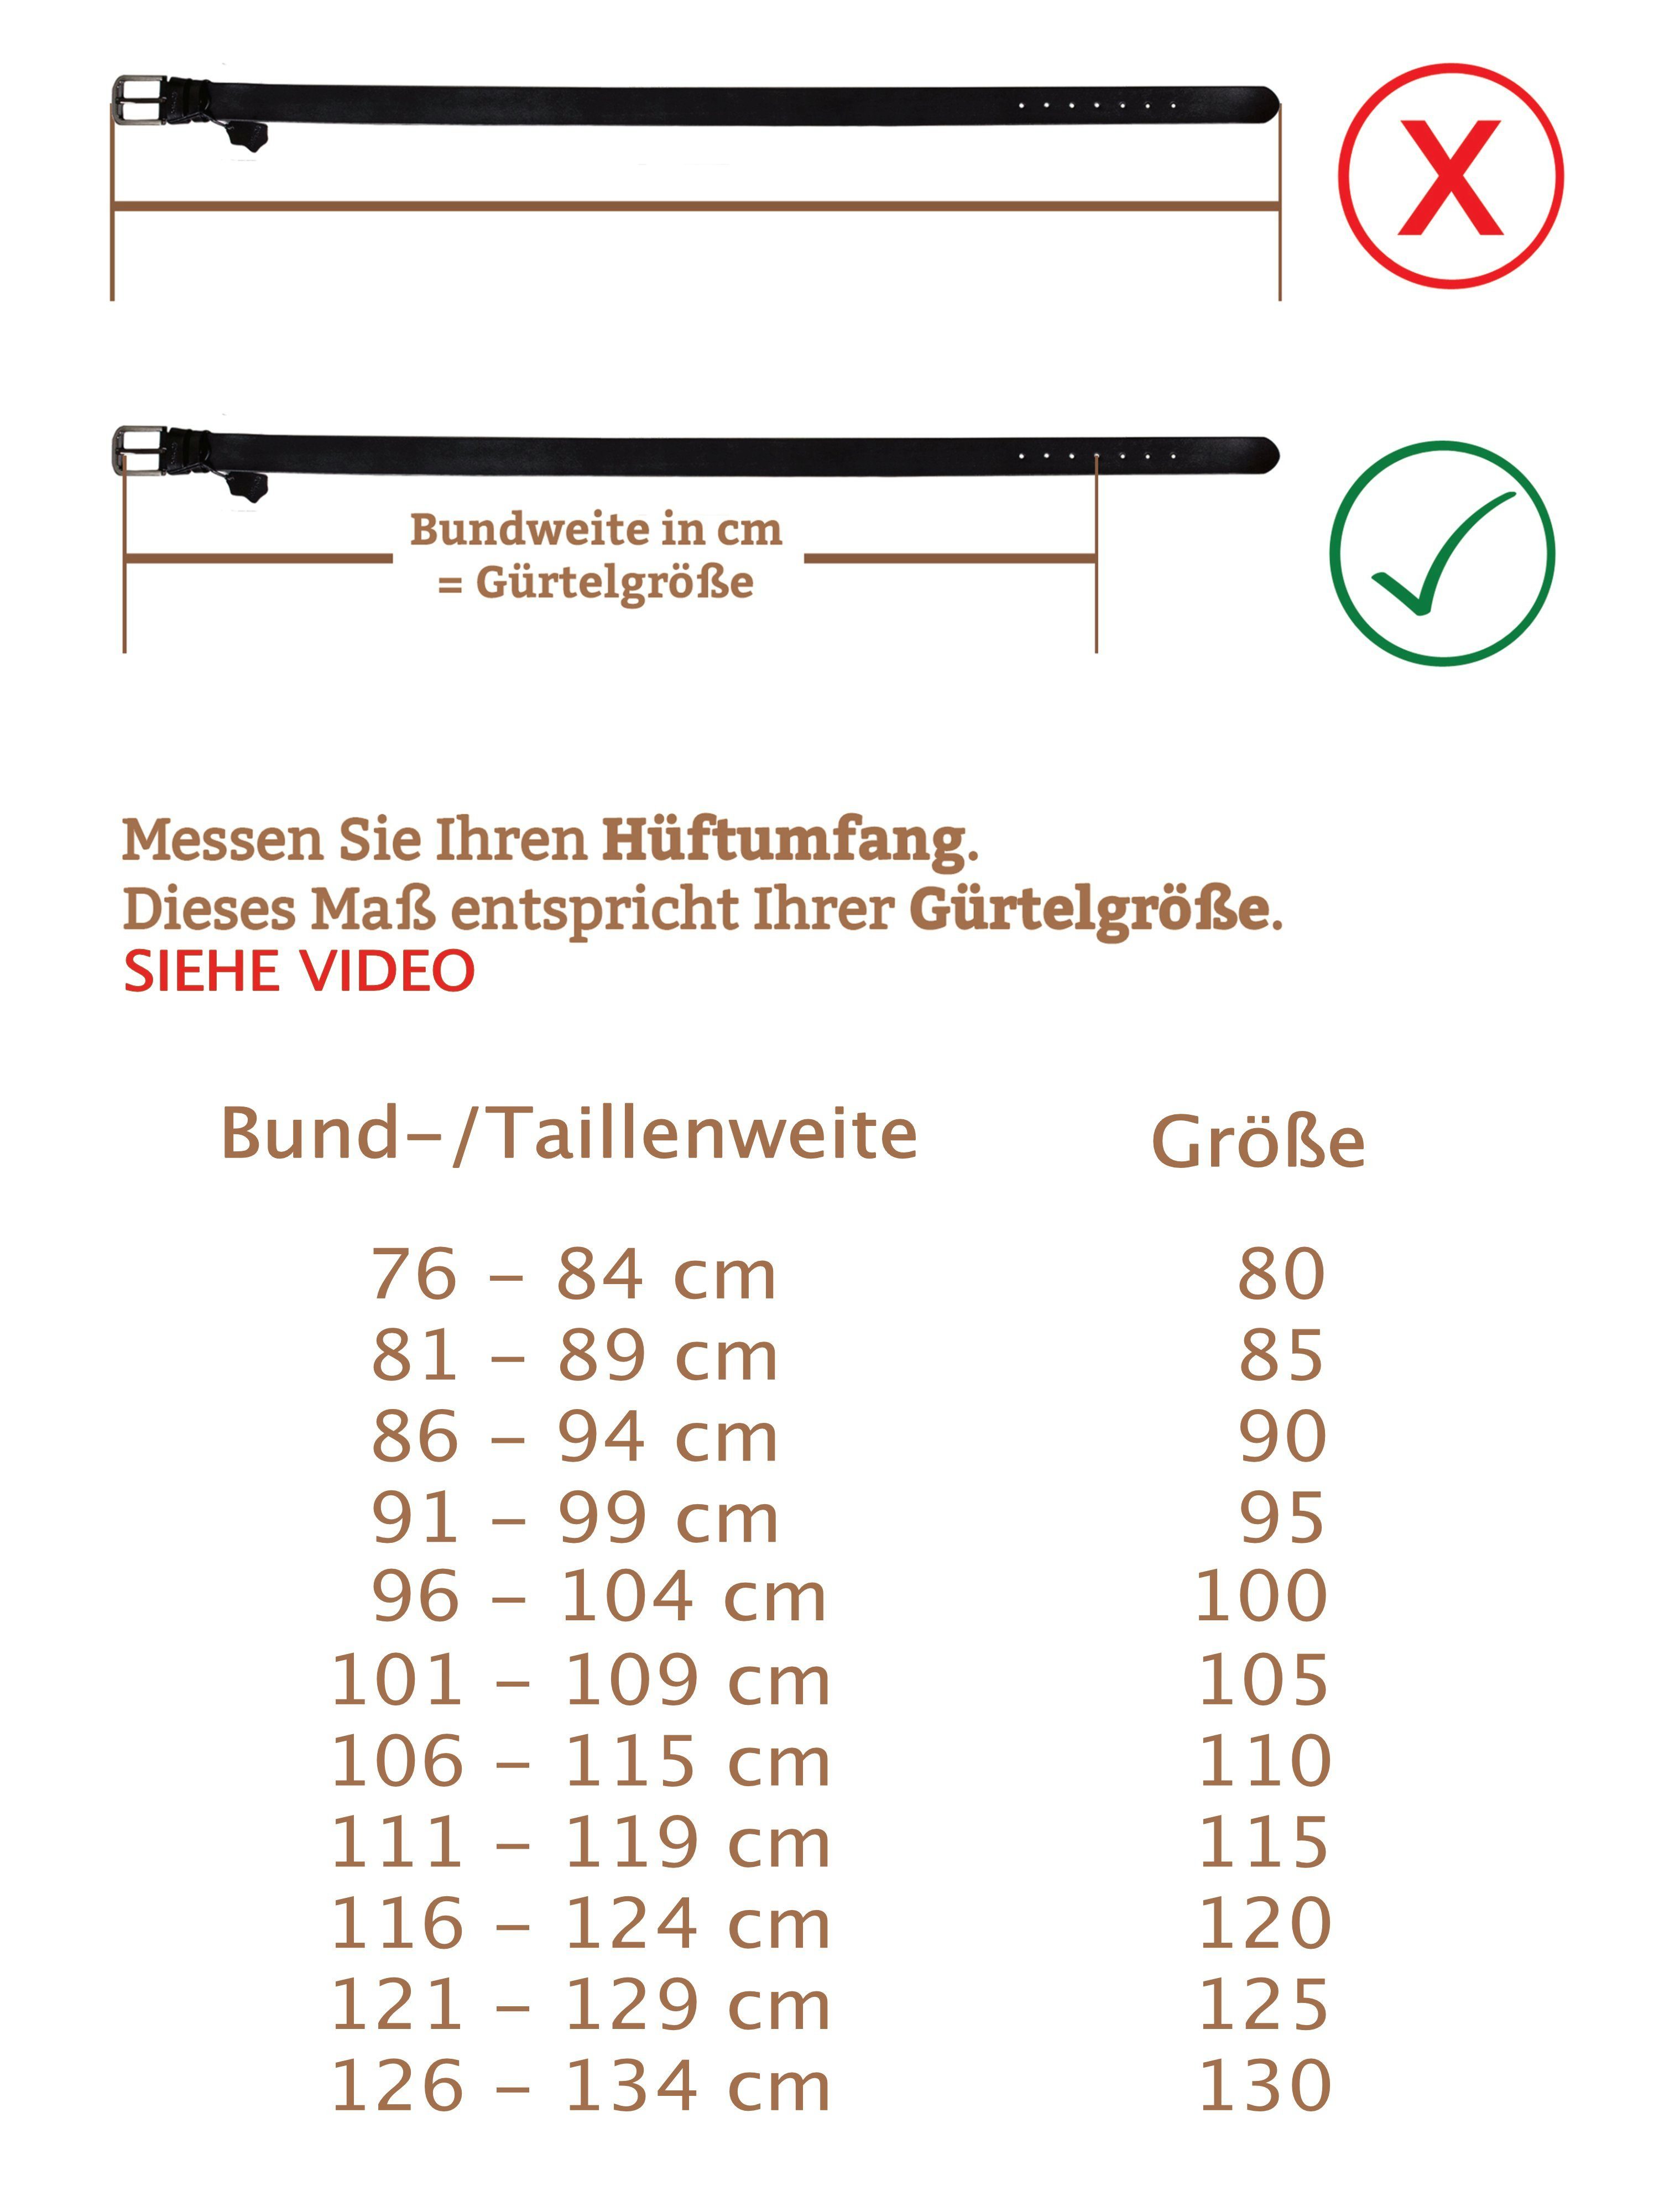 Cartvelli Ledergürtel Cartvelli Herren Ledergürtel Schwarz Made inkl. umweltfreundlich Geschenkbox Vollleder Germany in gegerbt 40mm